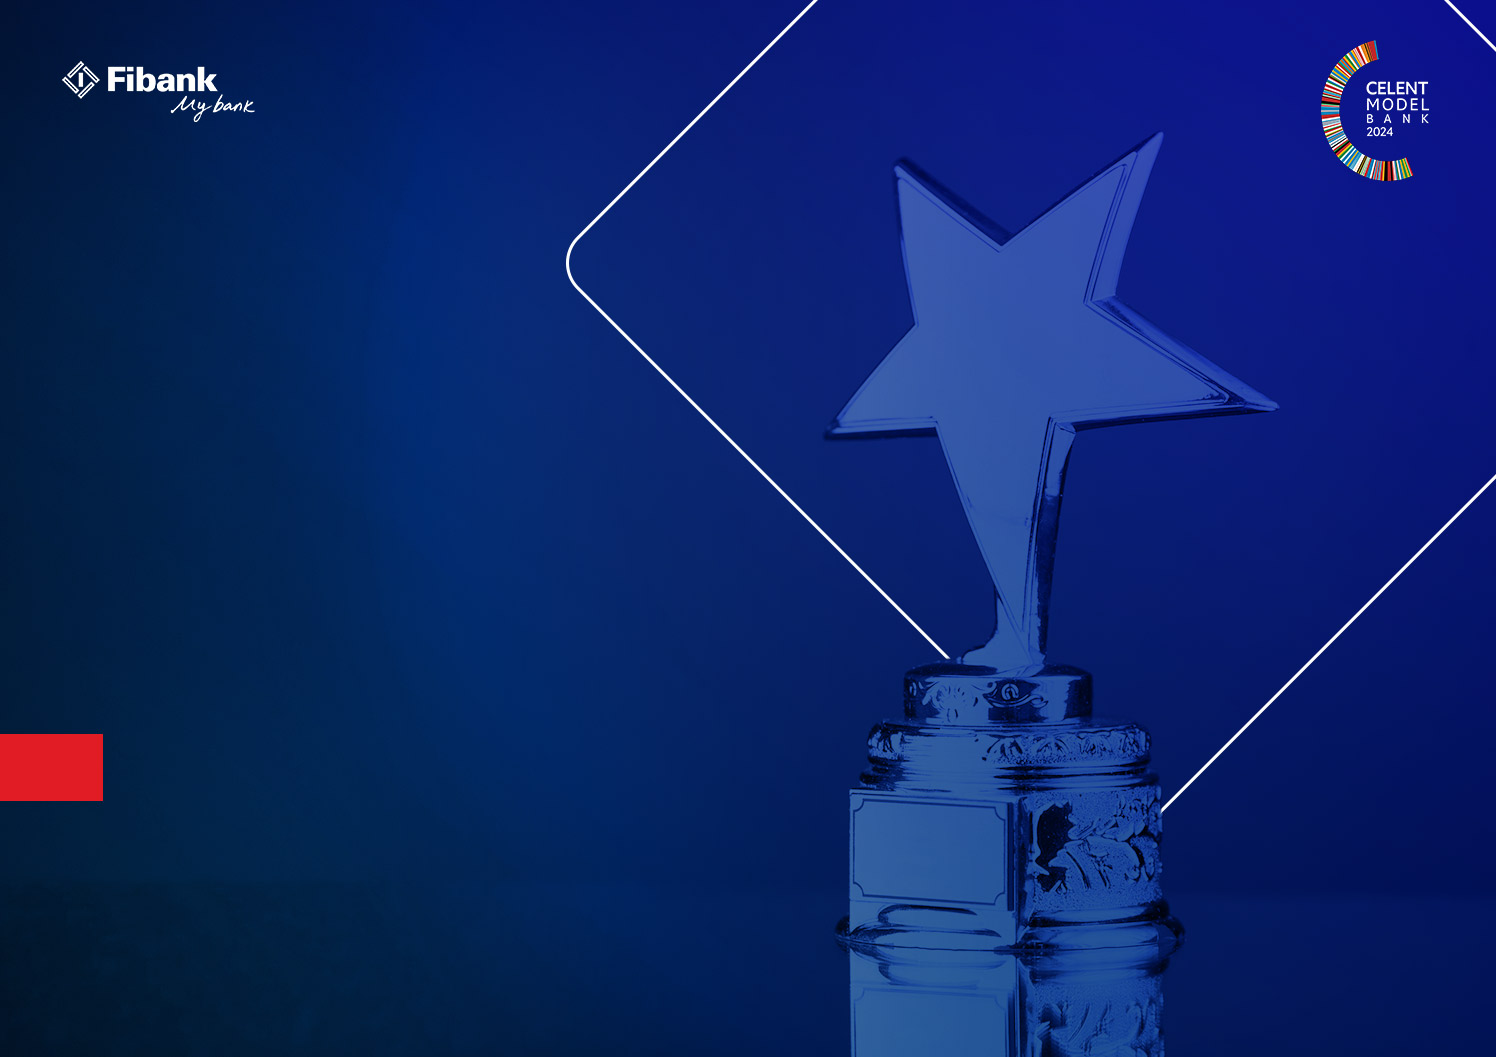  Fibank received the prestigious international Celent Model Bank award 